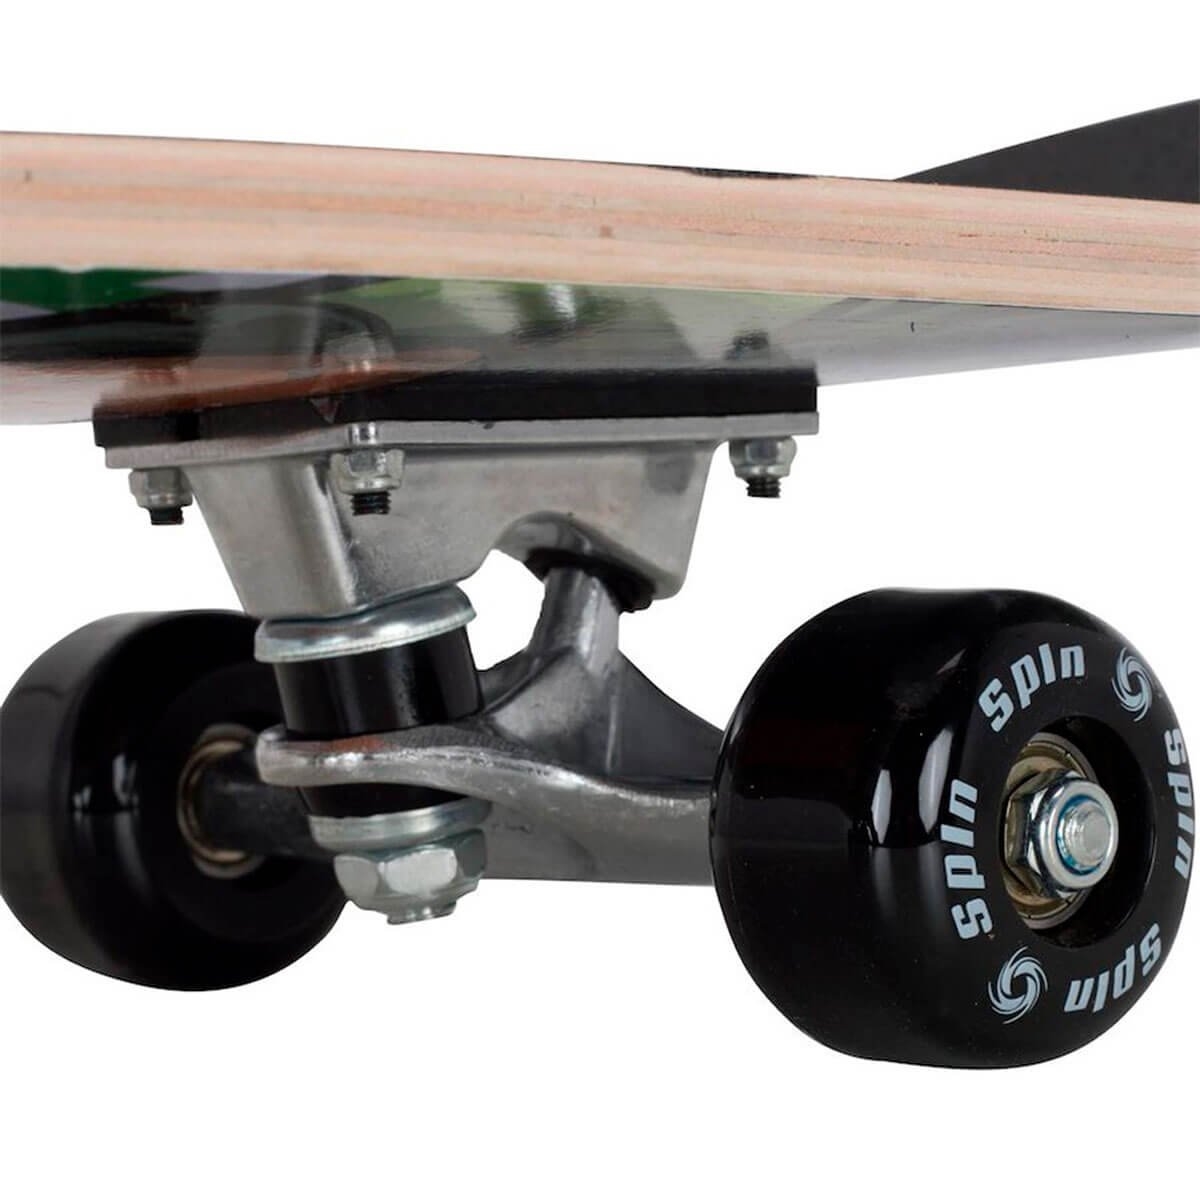 Skate CKS Street Spin Skateboard Card - VX-0309-418